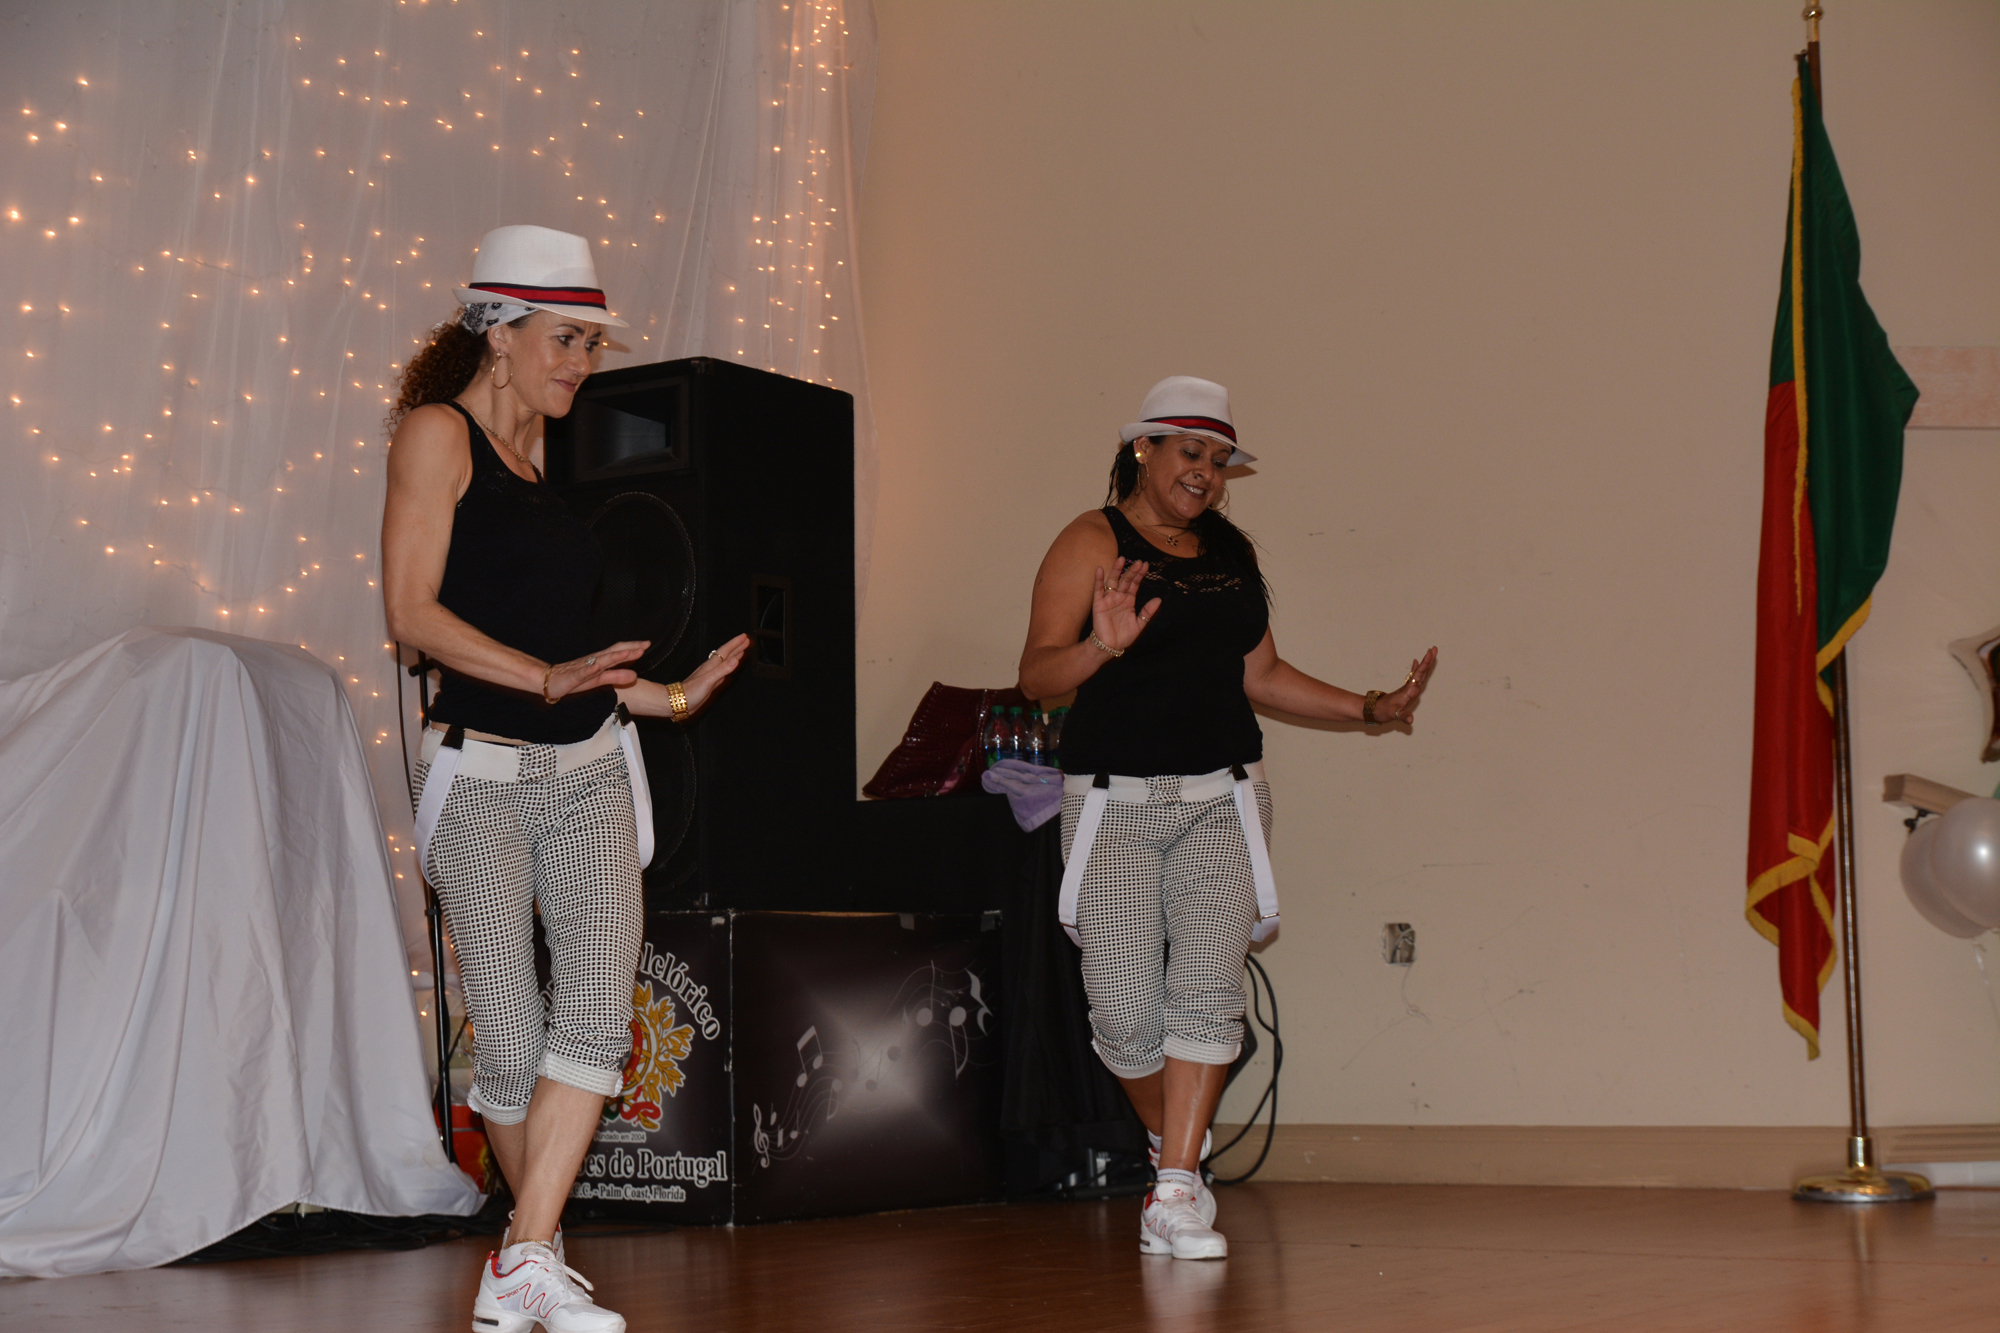 Michaela King and Dalia Irwin teach dance moves to 